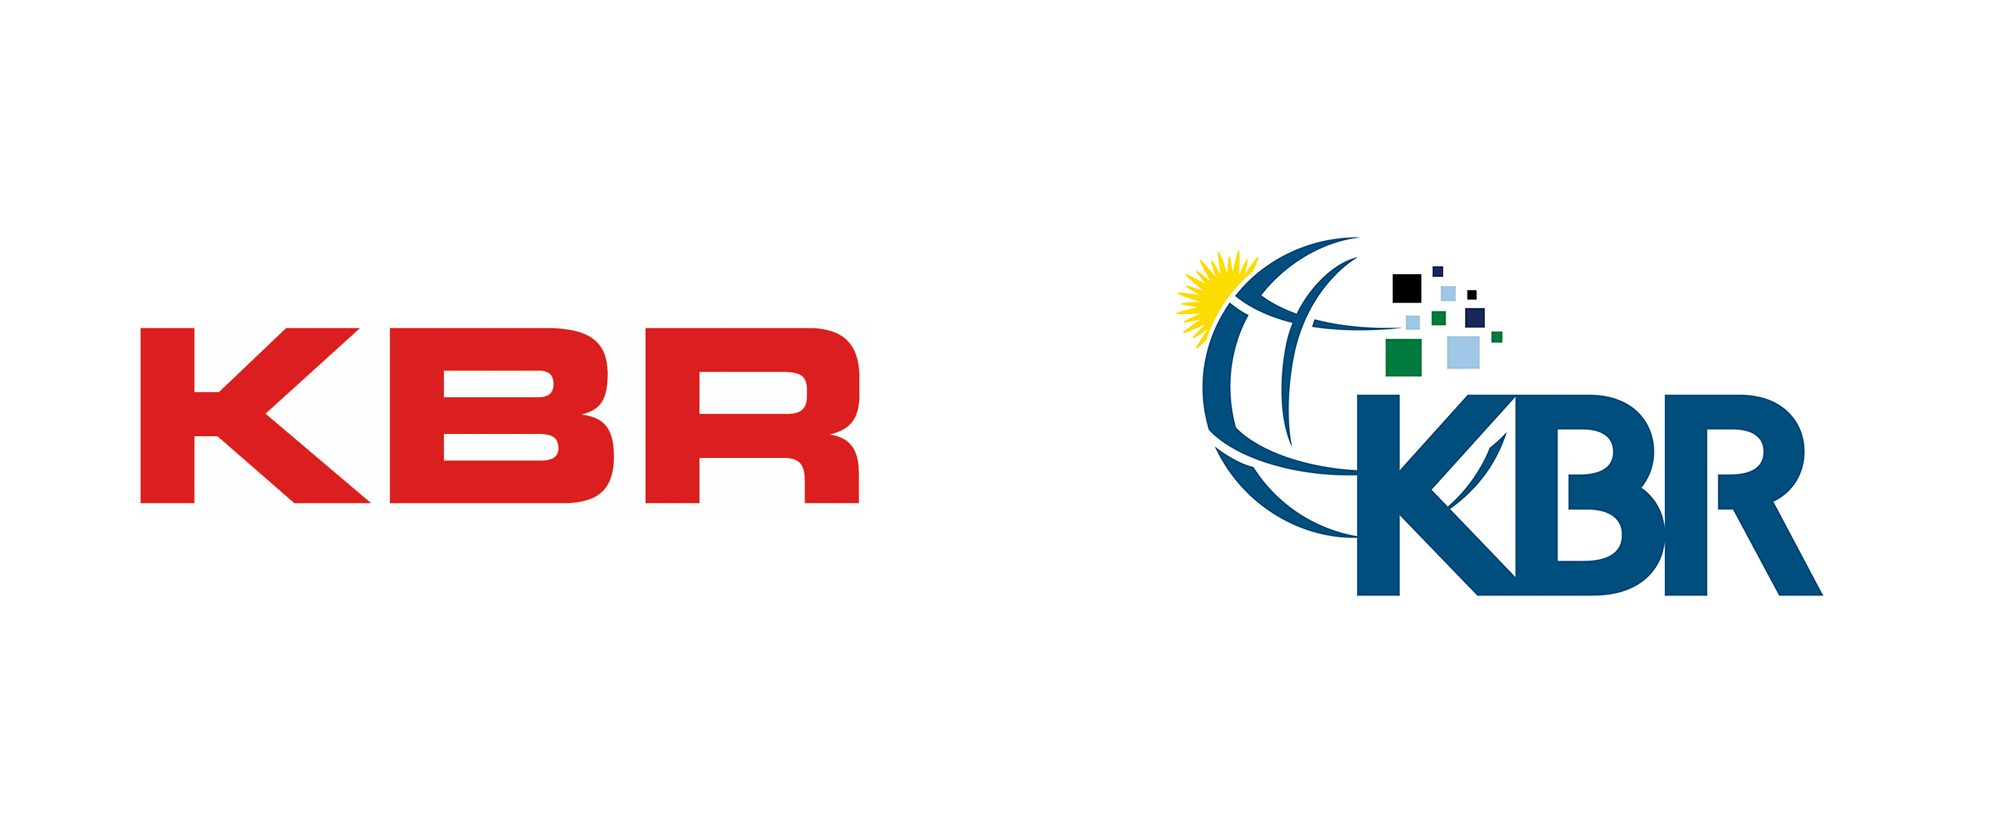 KBR Logo - Brand New: New Logo for KBR done In-house